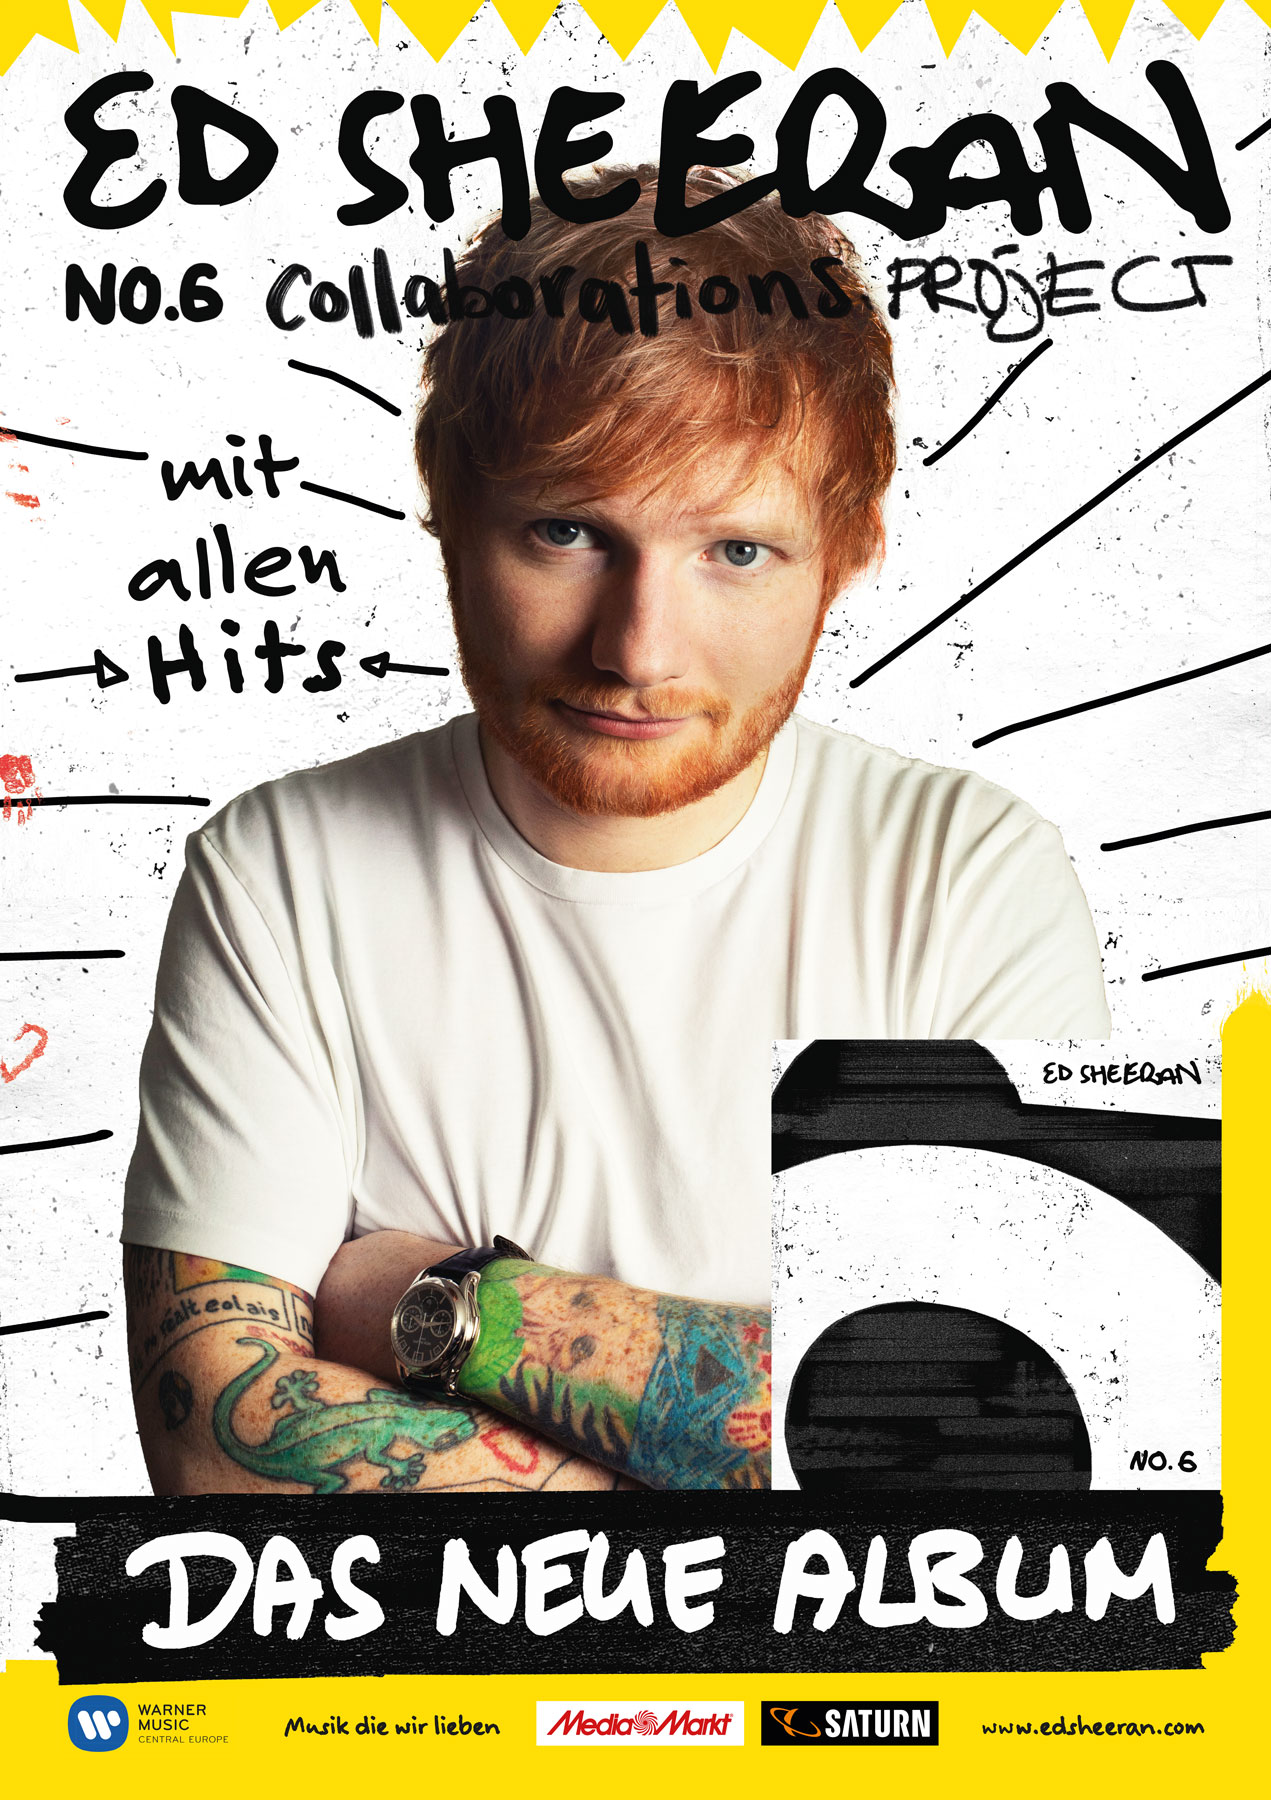 Ed Sheeran. Plakatkampagne. 1